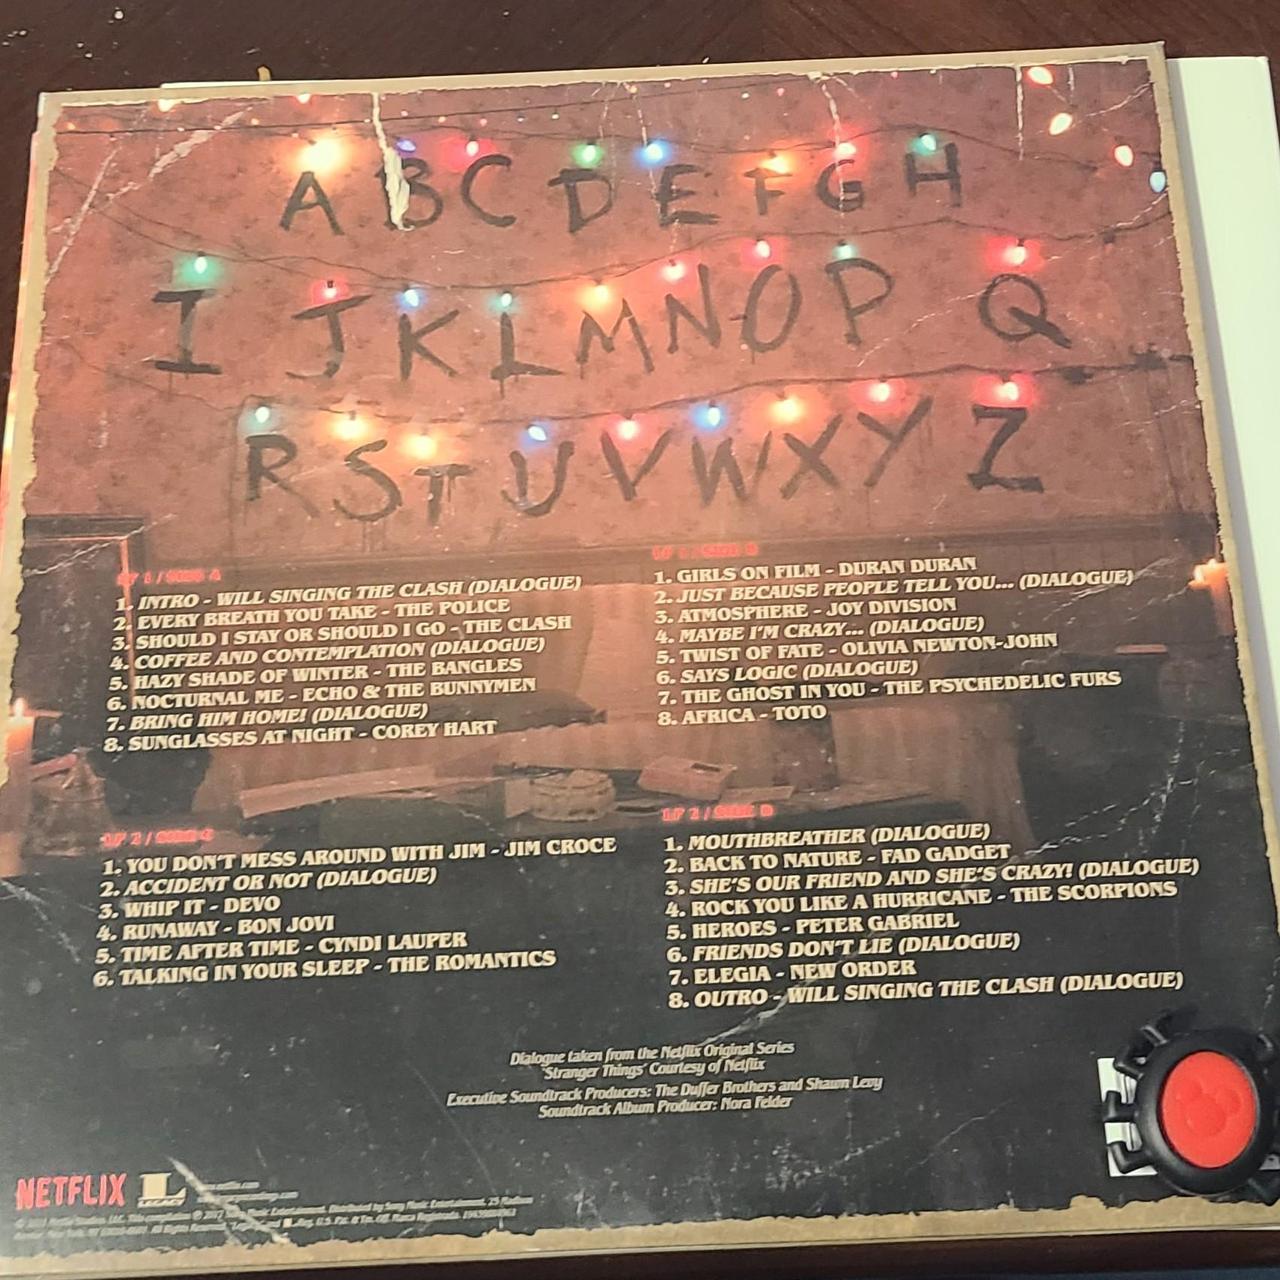  Friends (Original Soundtrack): CDs & Vinyl